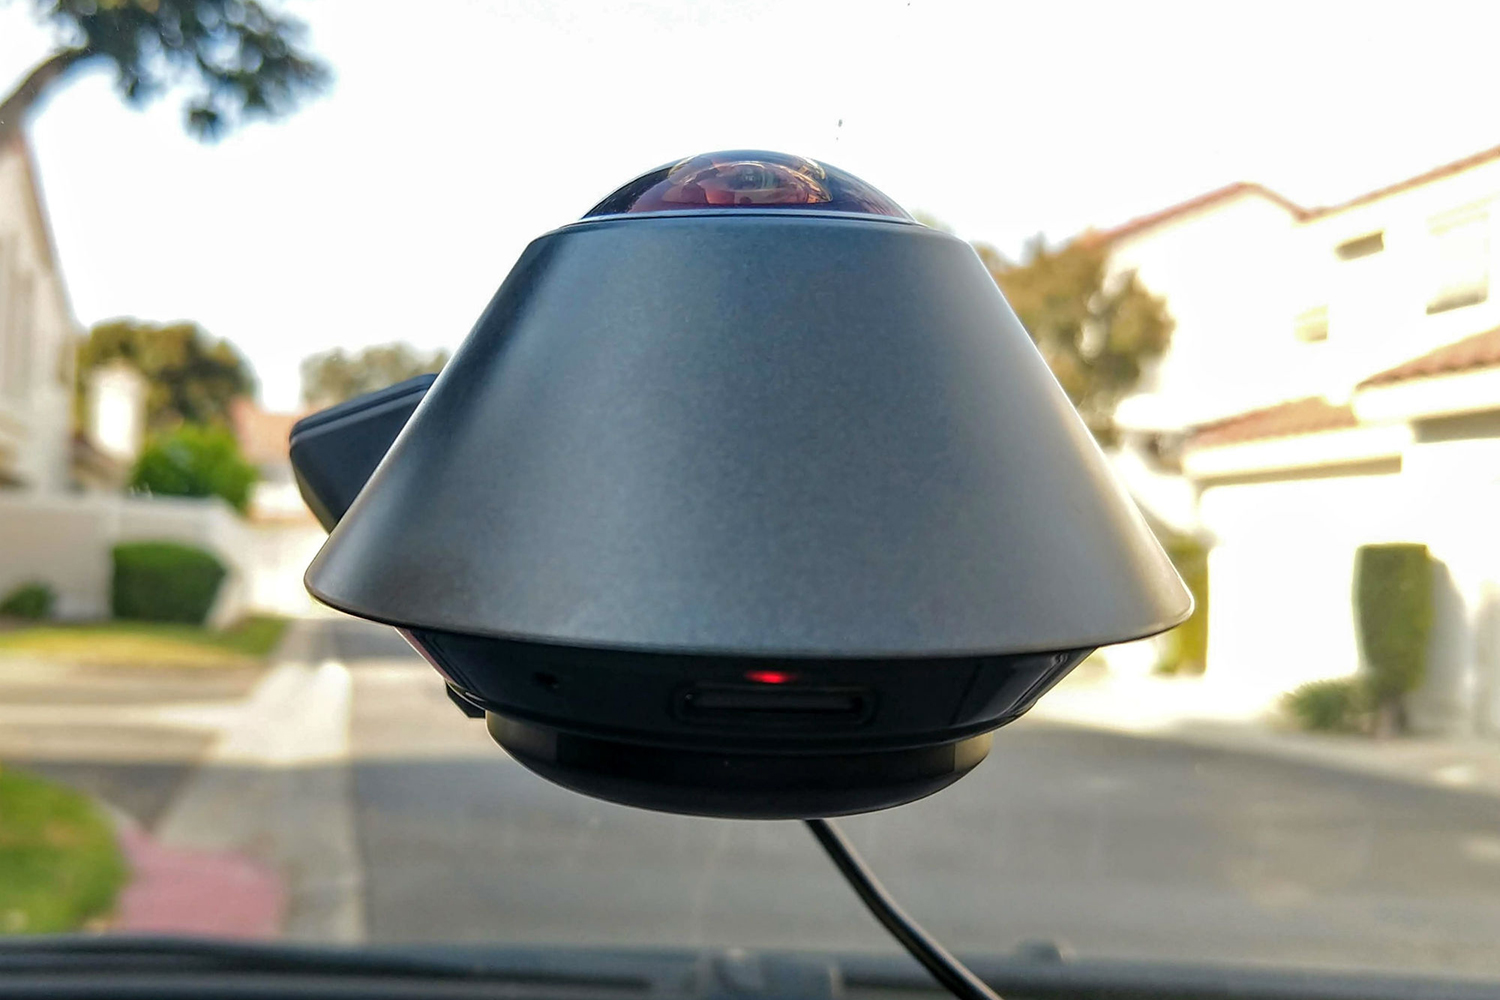 Waylens Secure360 WiFi Car Security Dash Camera Review